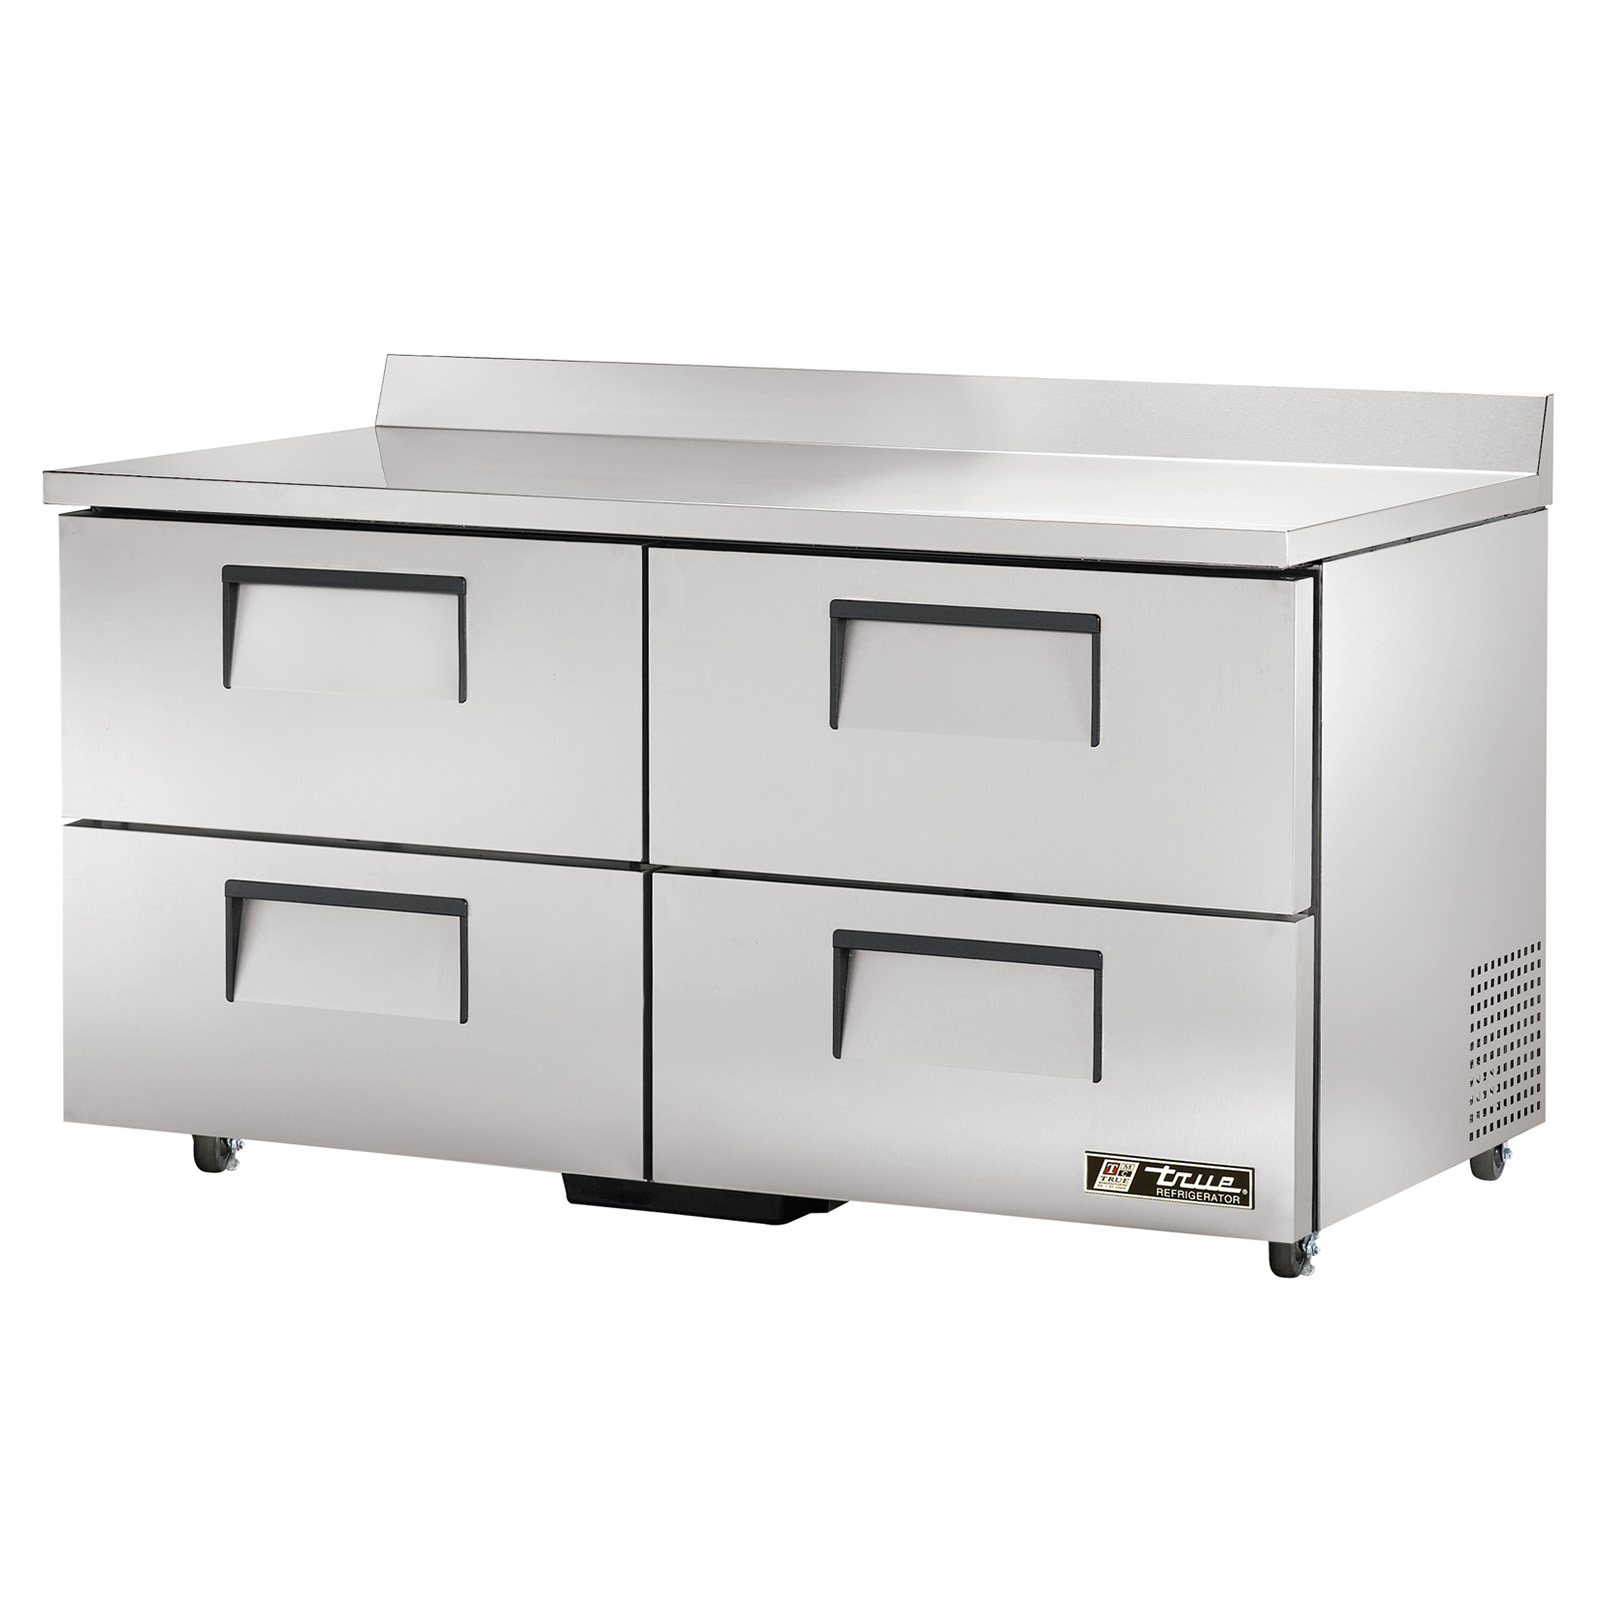 True Food Service Equipment TWT-60D-4-ADA Refrigerated Counter, Work Top